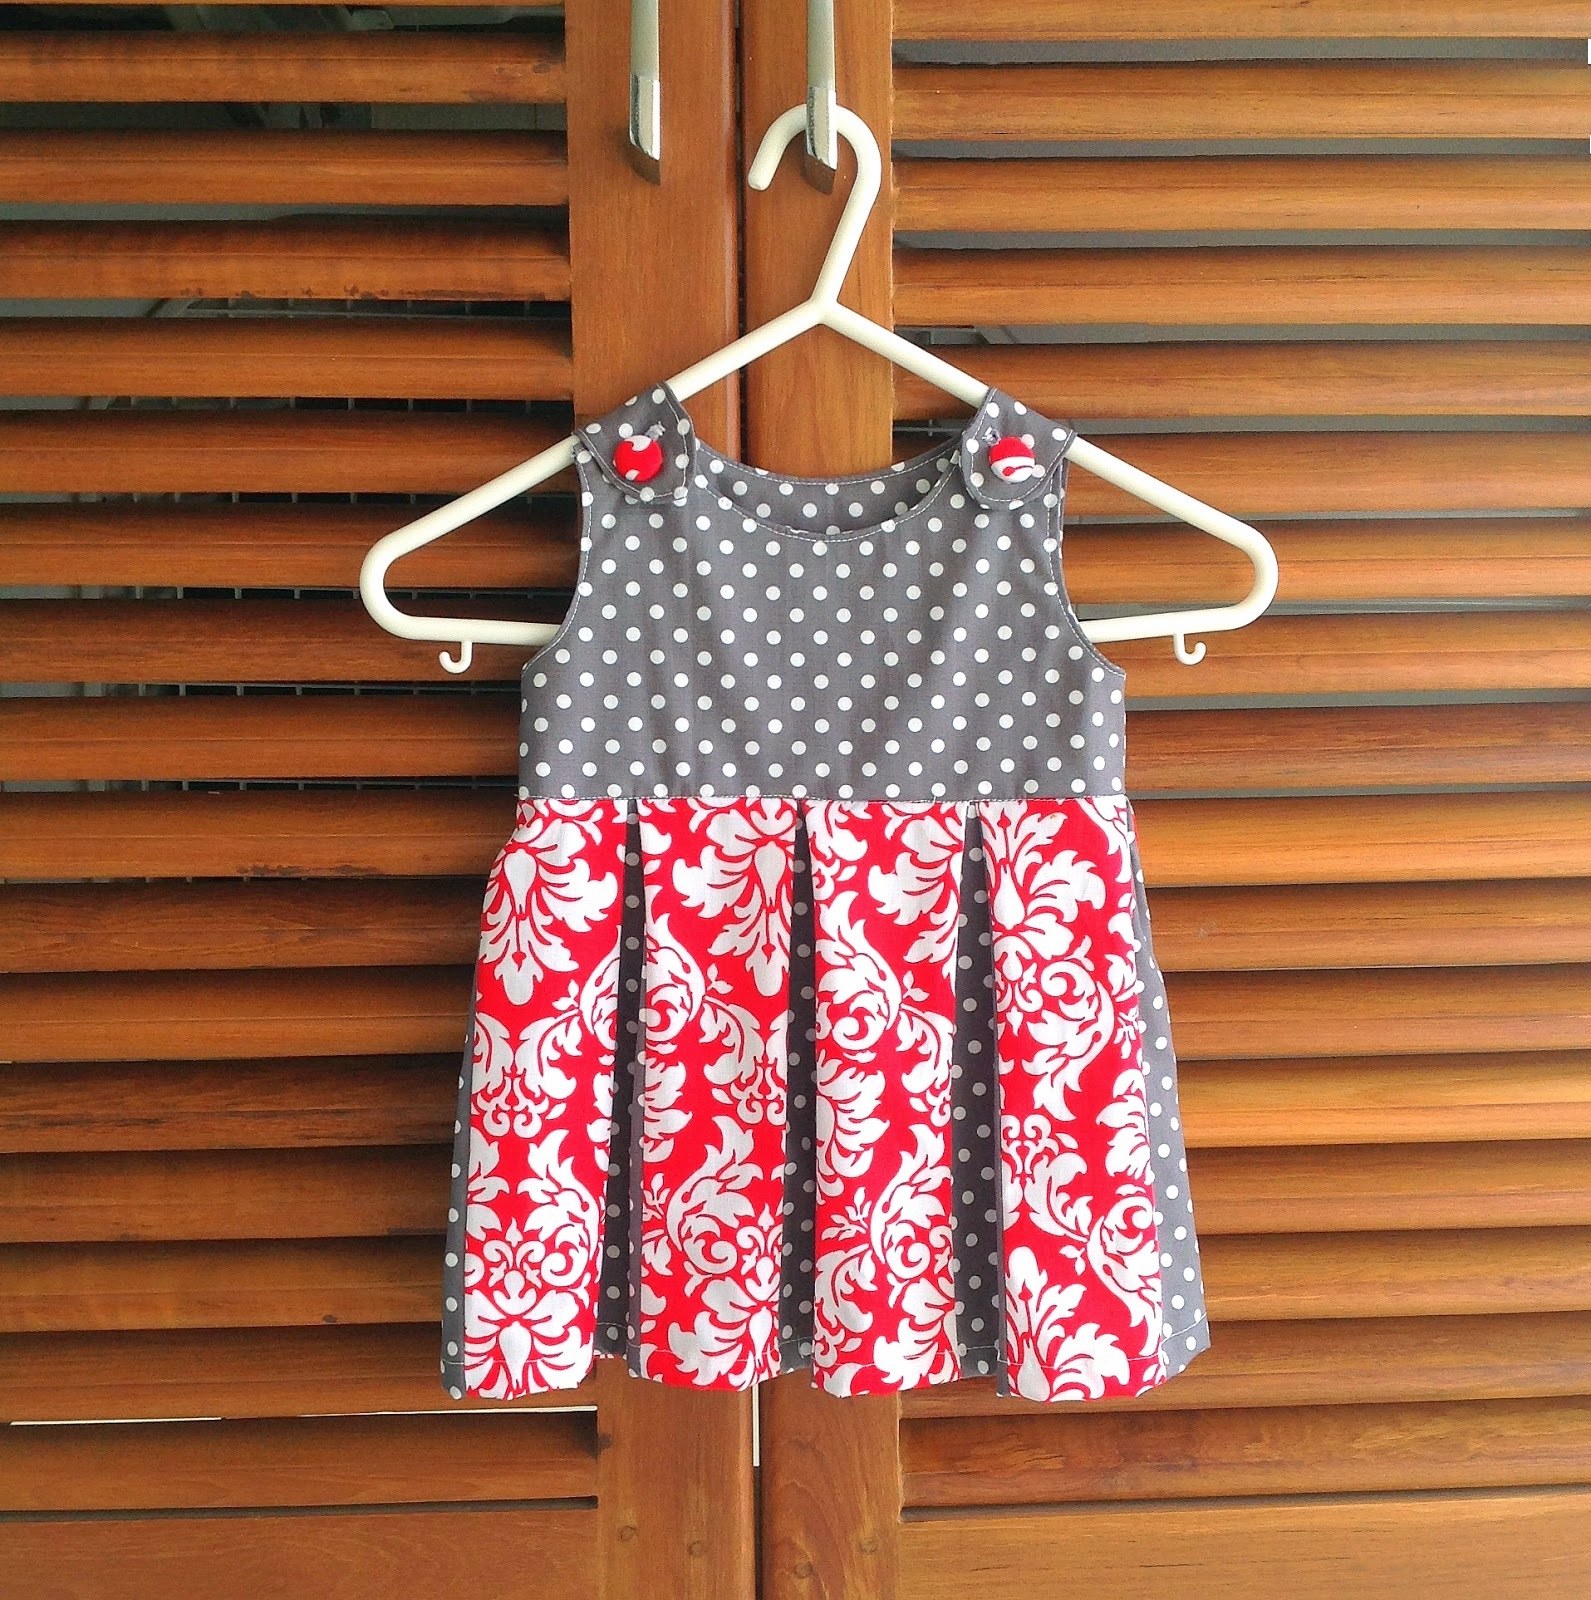 Free Printable Baby Dress Patterns